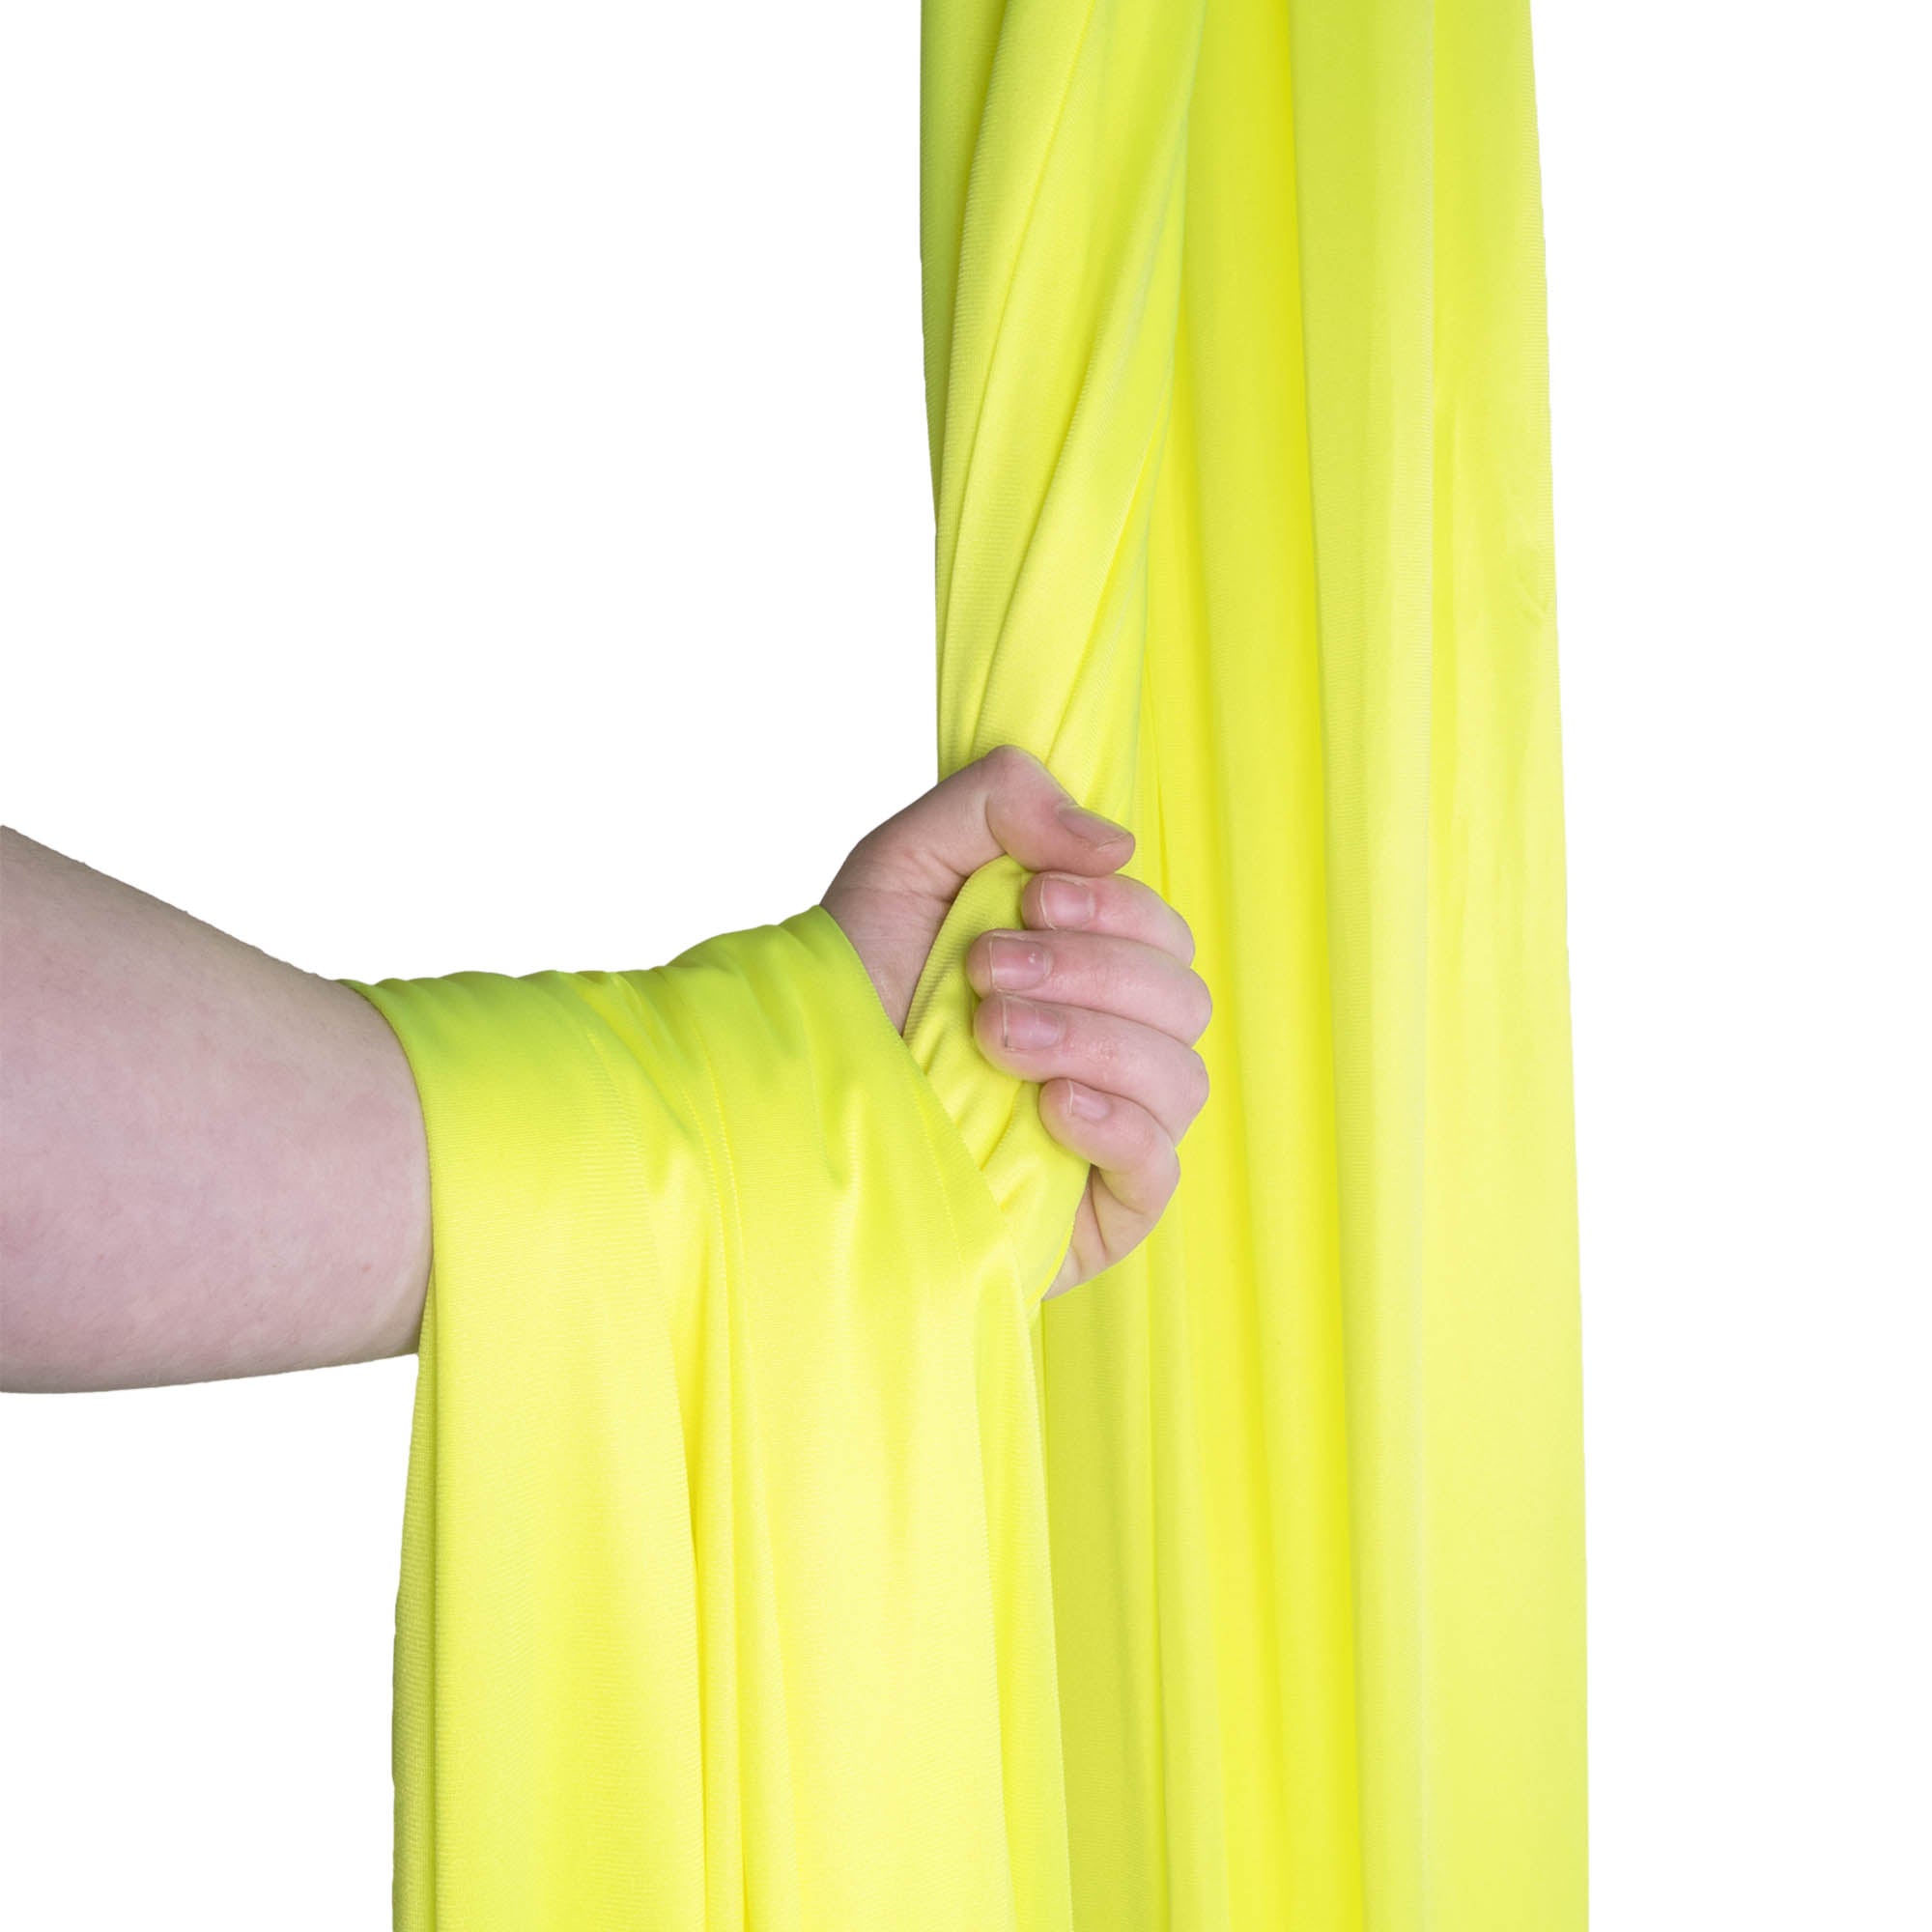 Neon yellow silk wrapped around hand